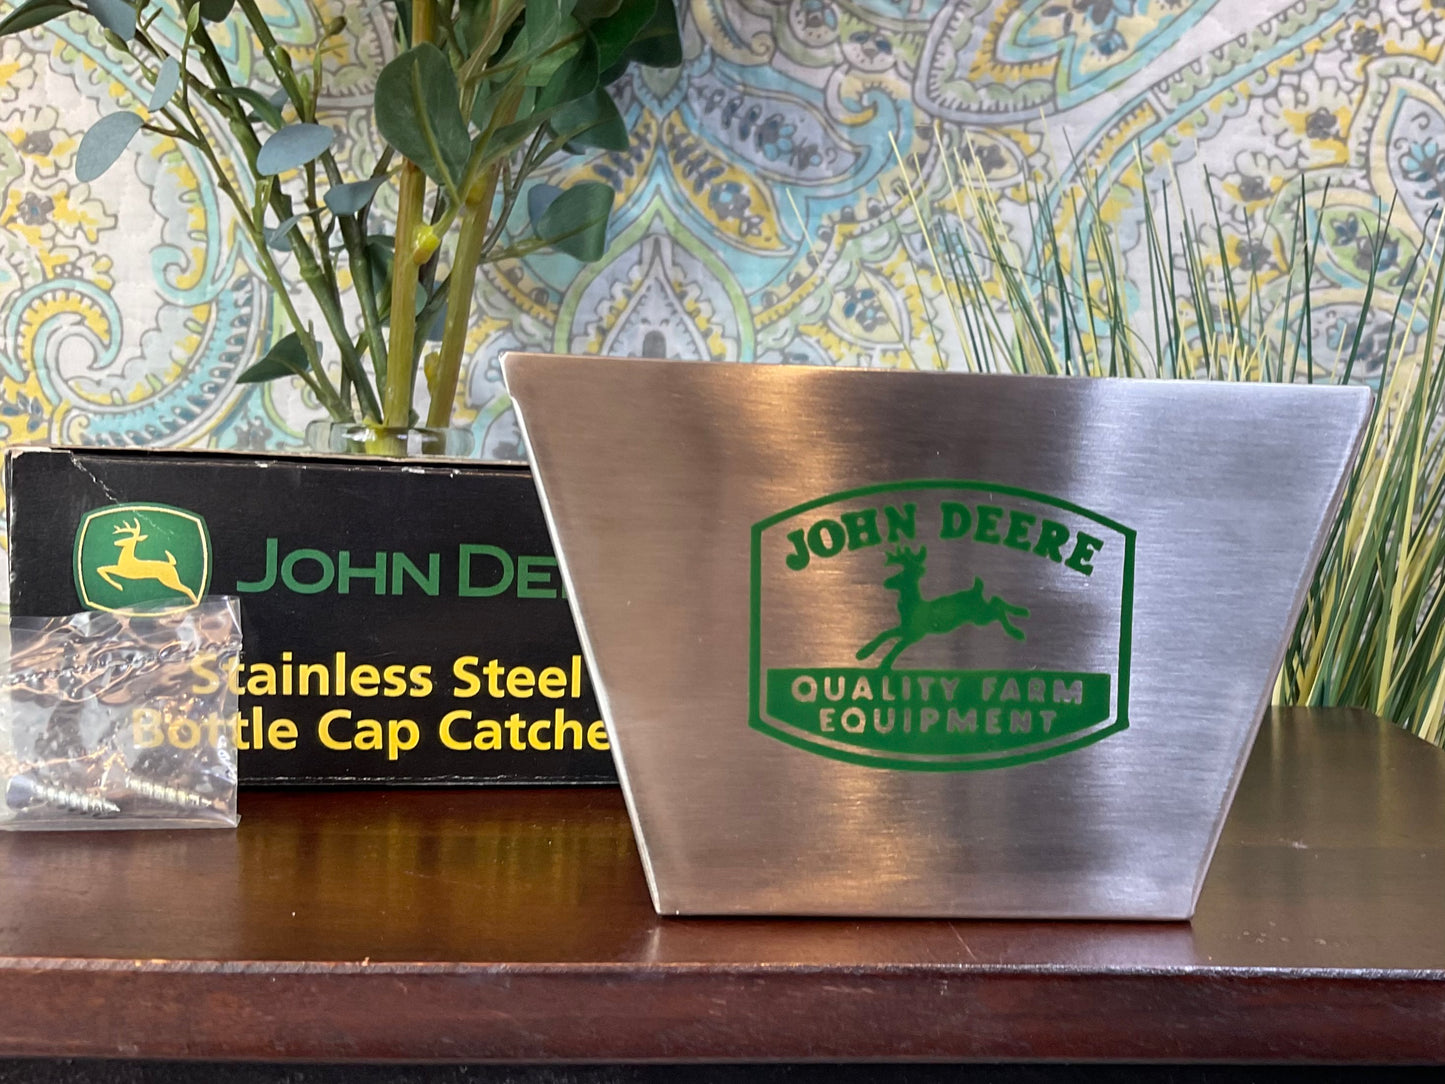 John Deere Stainless Steel Bottle Cap Catcher